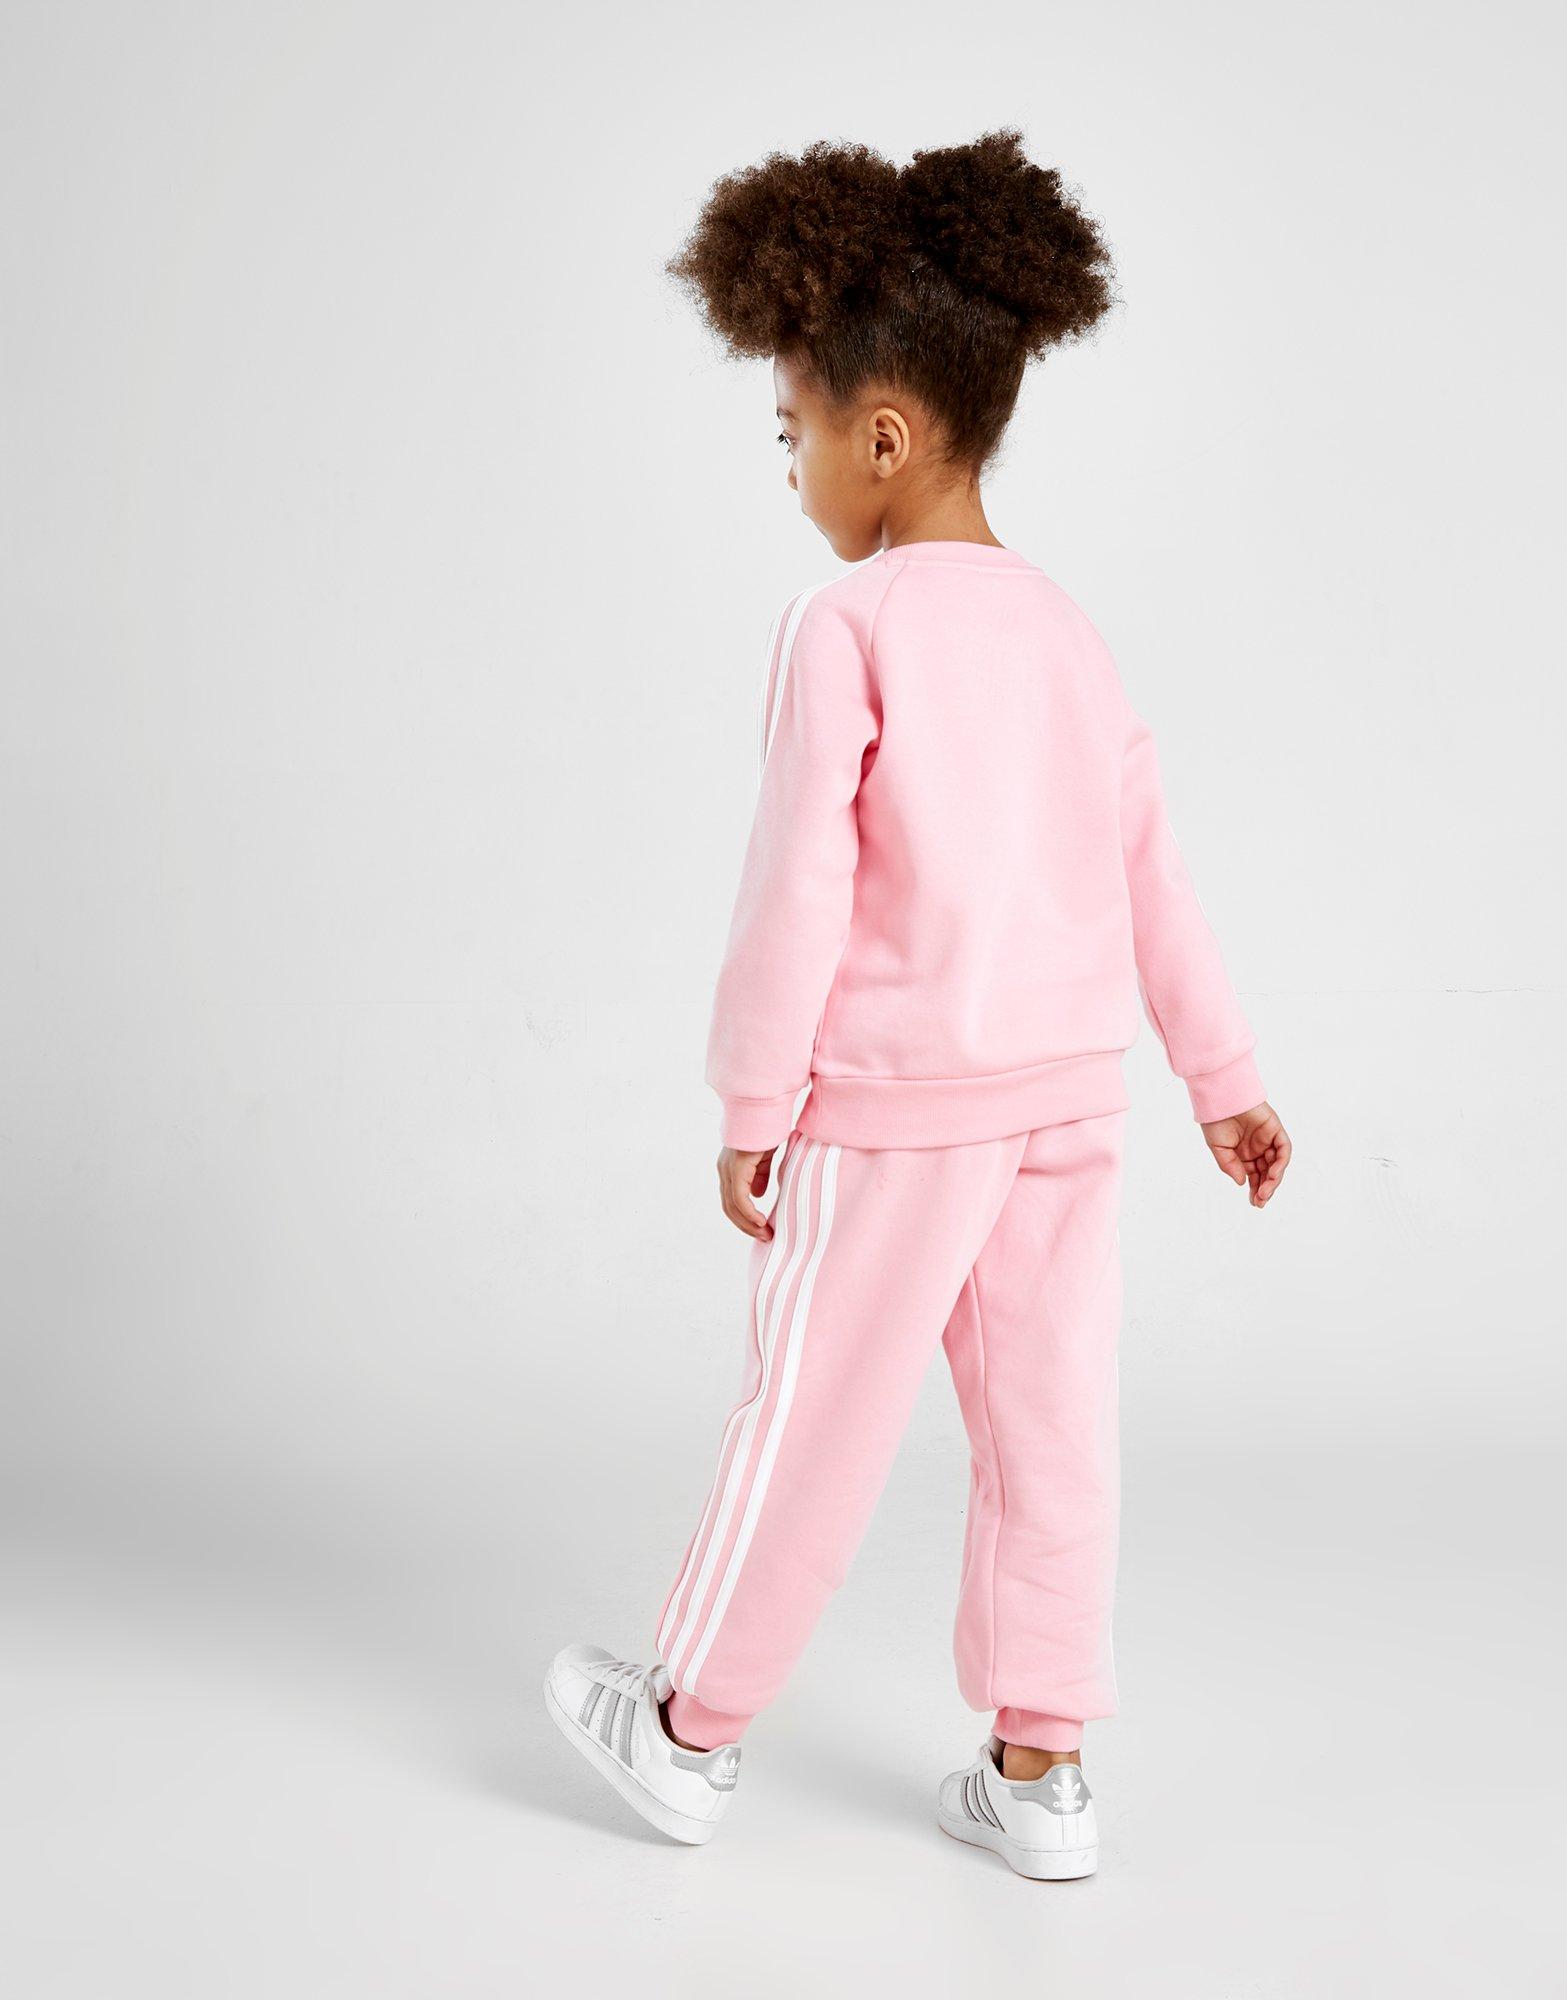 girls pink adidas tracksuit